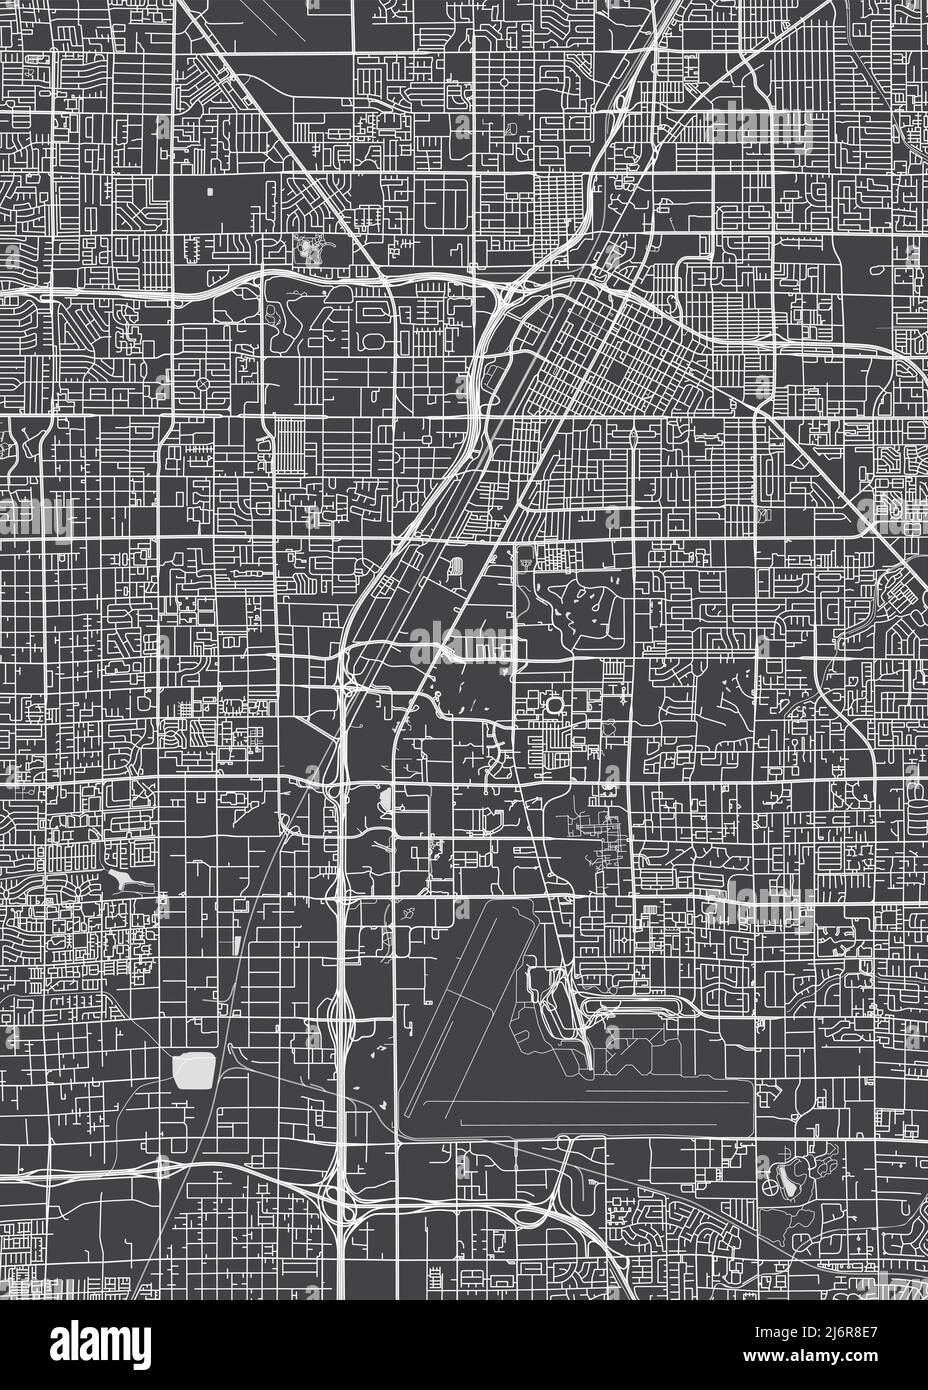 Stadtplan Las Vegas, monochromer Detailplan, Vektorgrafik Stock Vektor